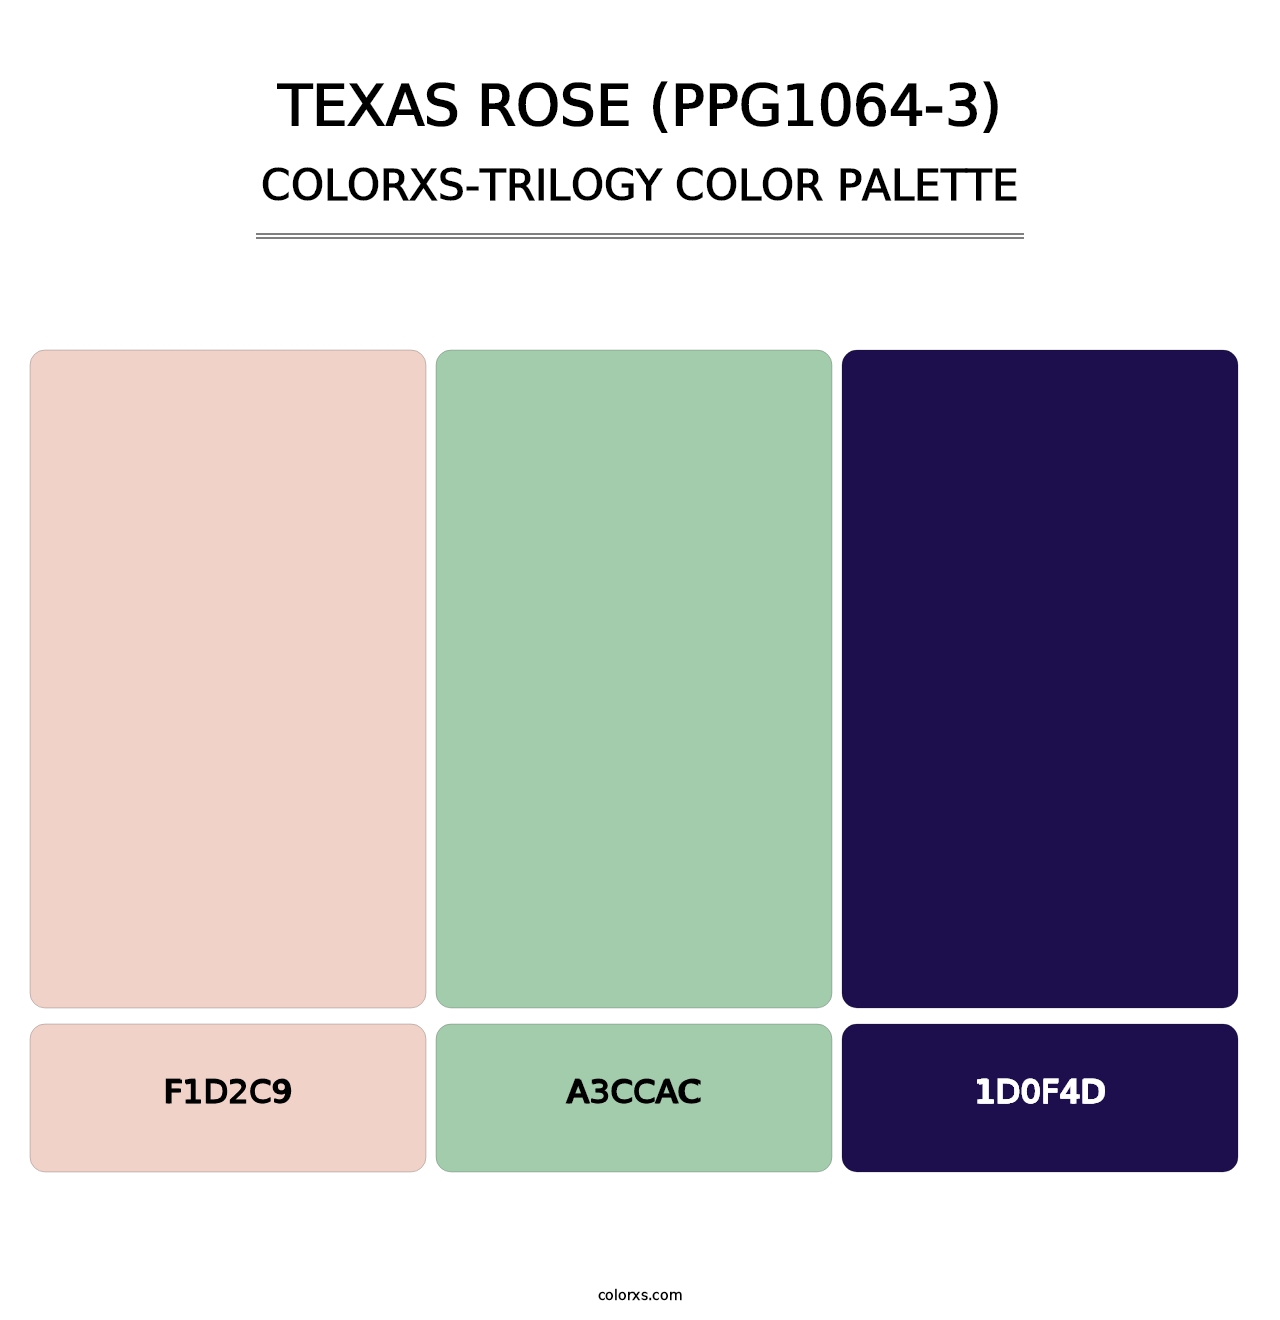 Texas Rose (PPG1064-3) - Colorxs Trilogy Palette